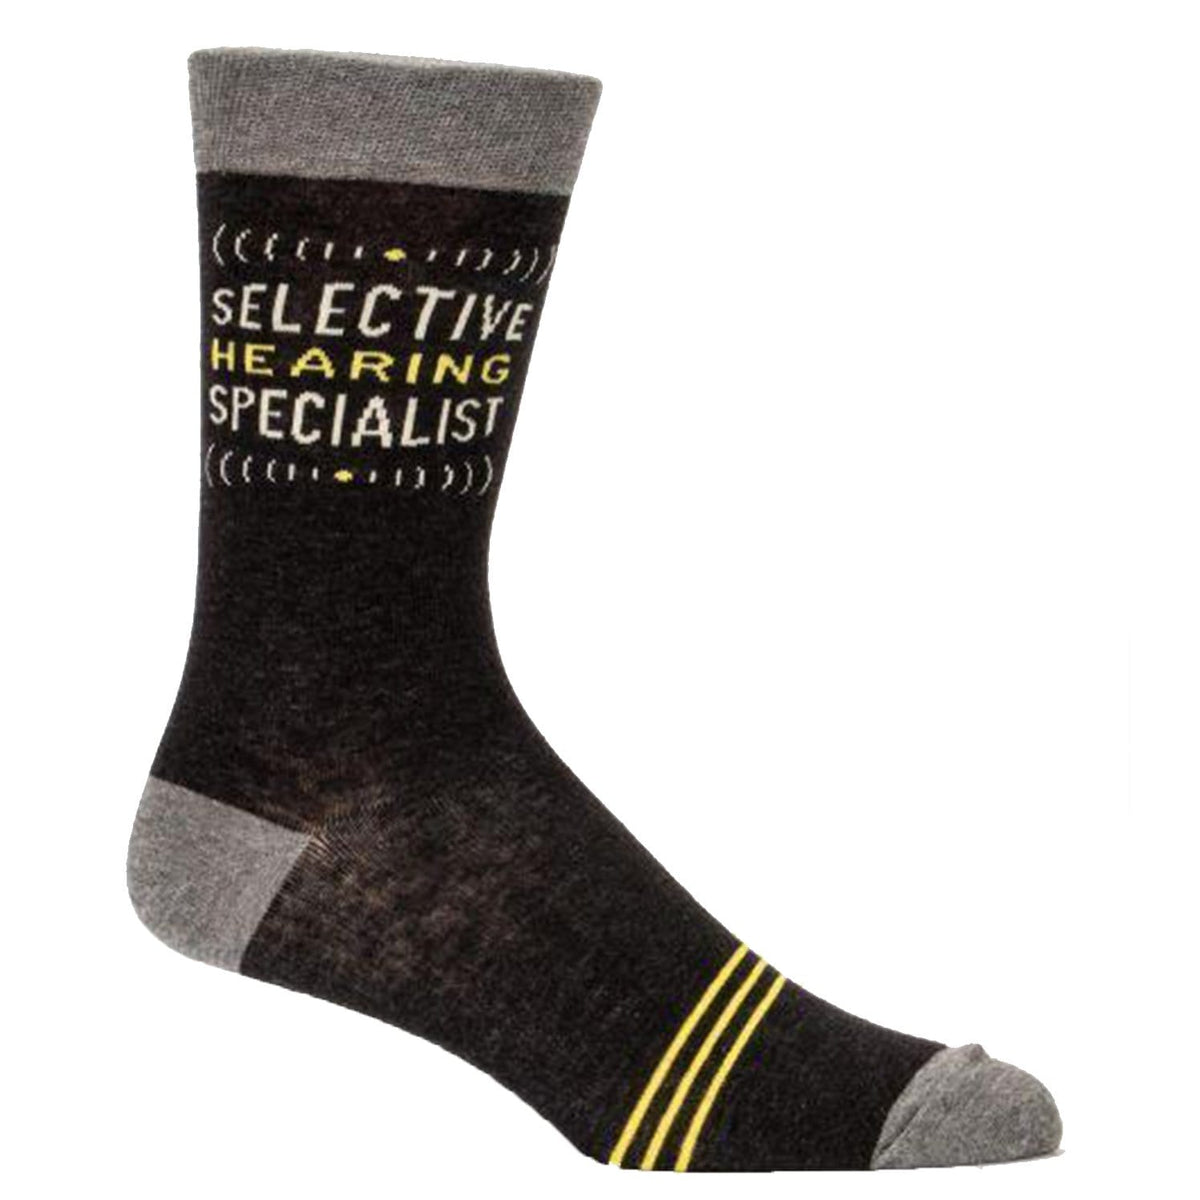 Selective Hearing Specialist Sock Men’s Crew Socks black